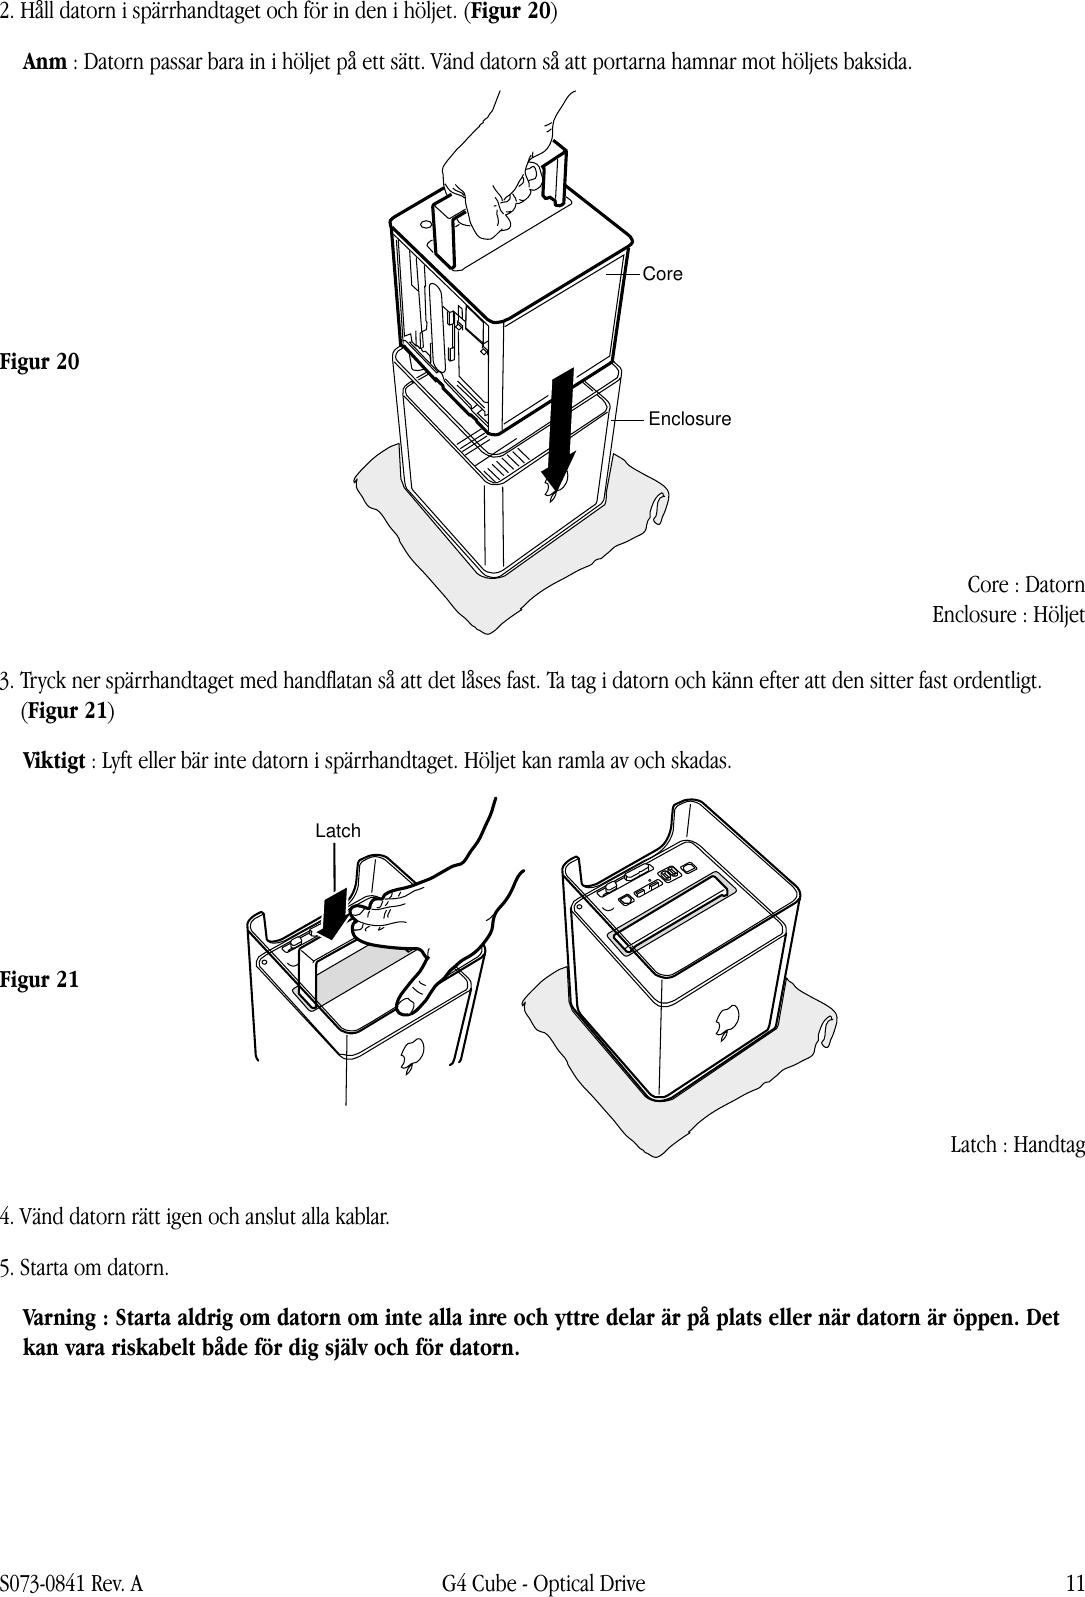 Page 11 of 12 - Apple Power Mac G4 (Cube) Optical Drive User Manual - Optisk Enhet Instruktioner För Byte 073-0841-a